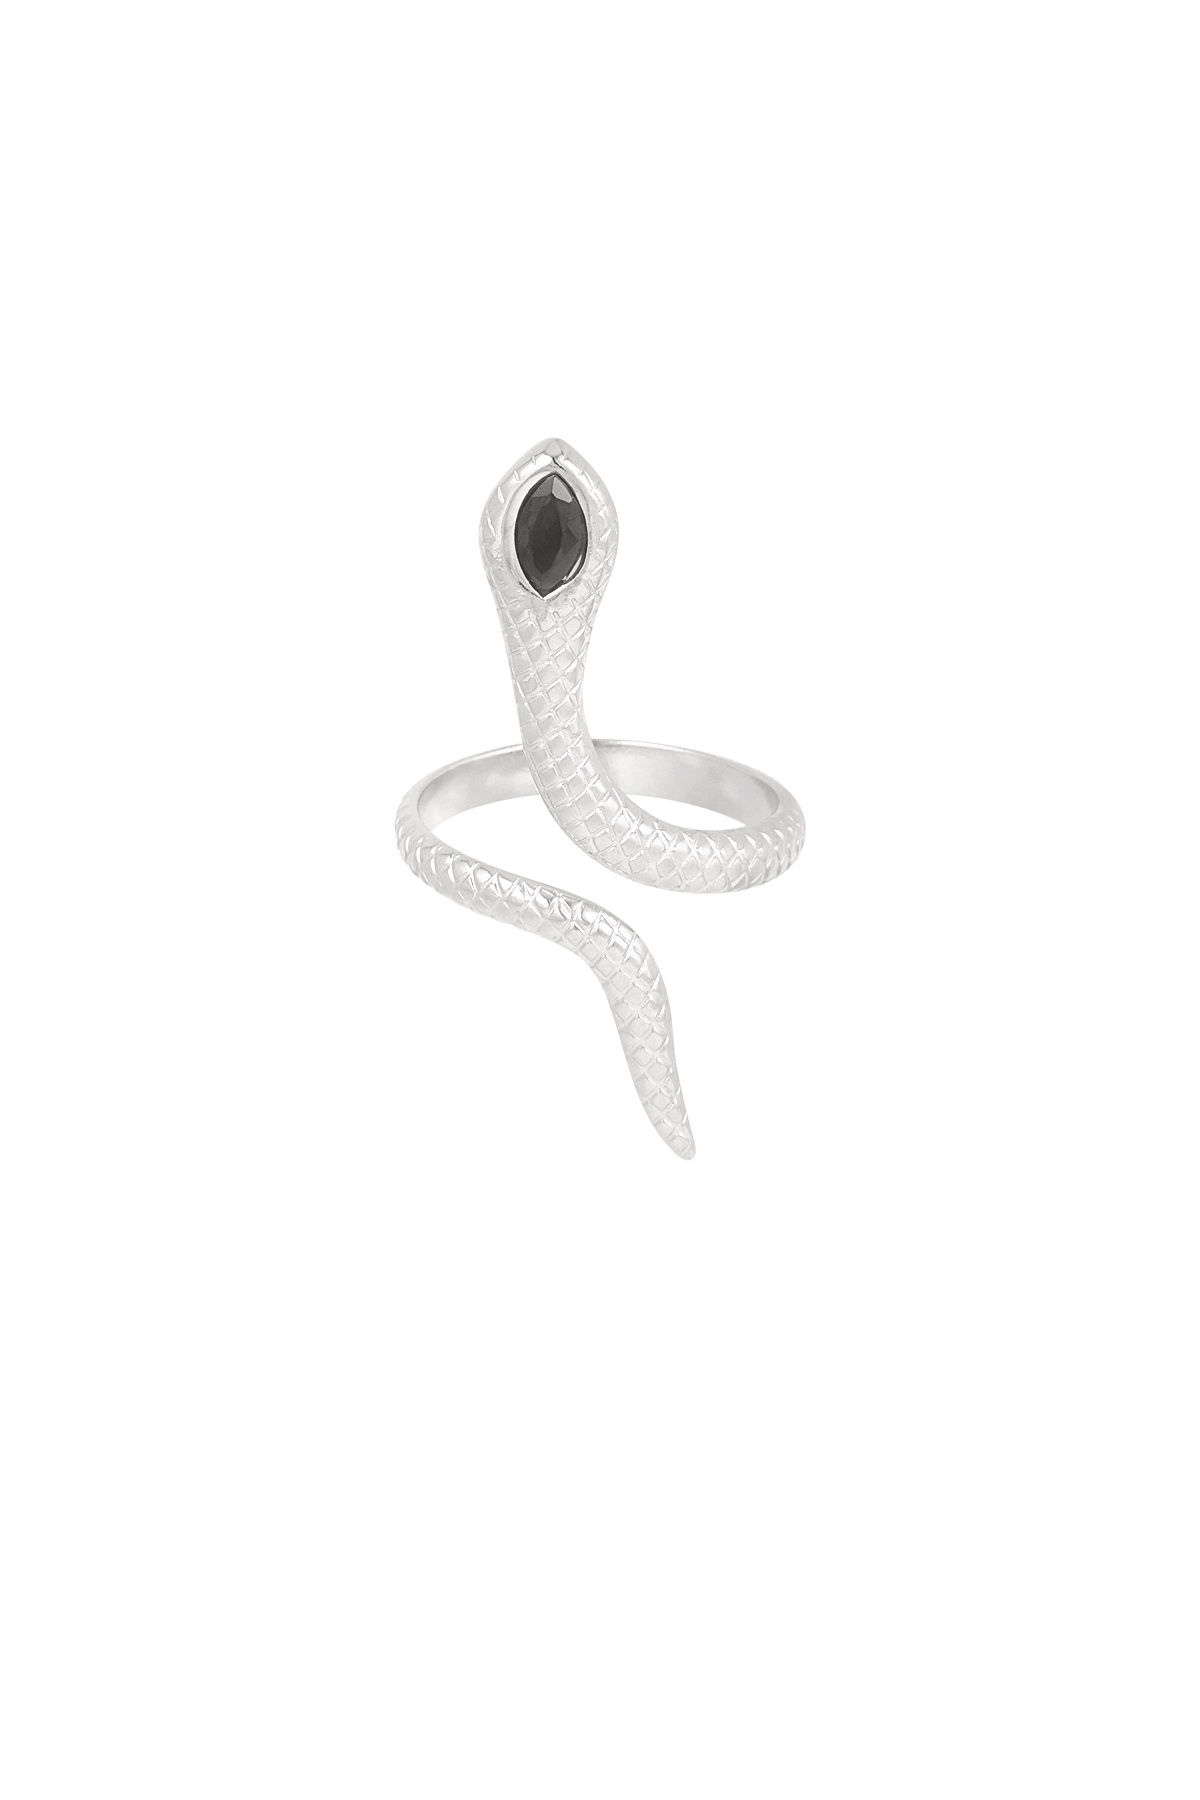 Black snake ring - silver 